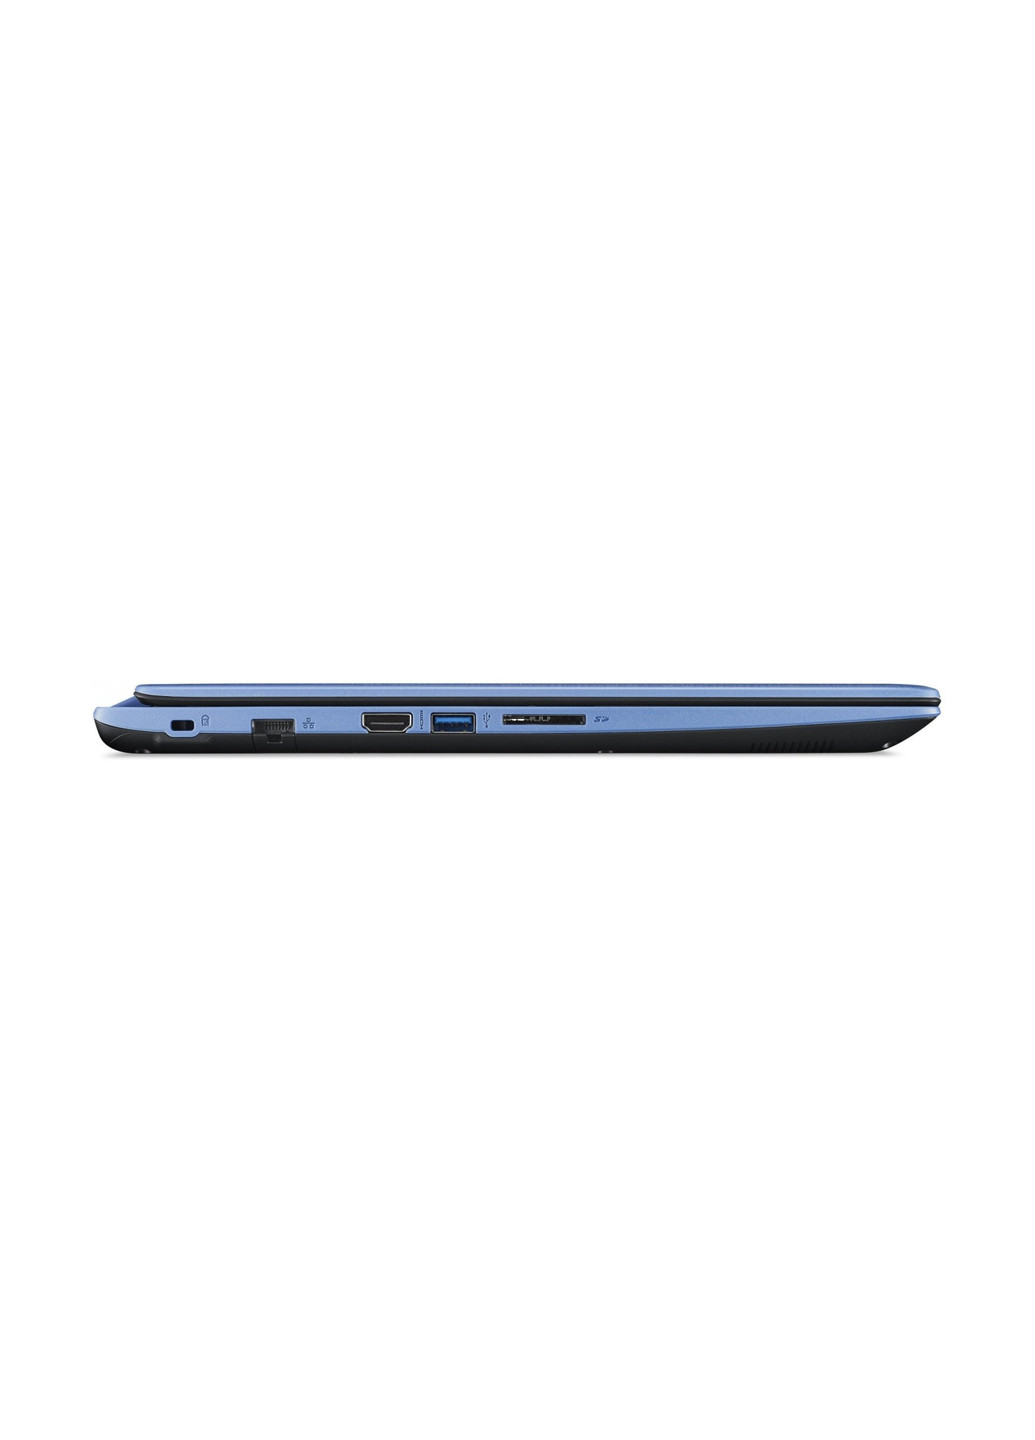 Ноутбук Acer aspire 3 a315-53 (nx.h4peu.010) blue (134076141)